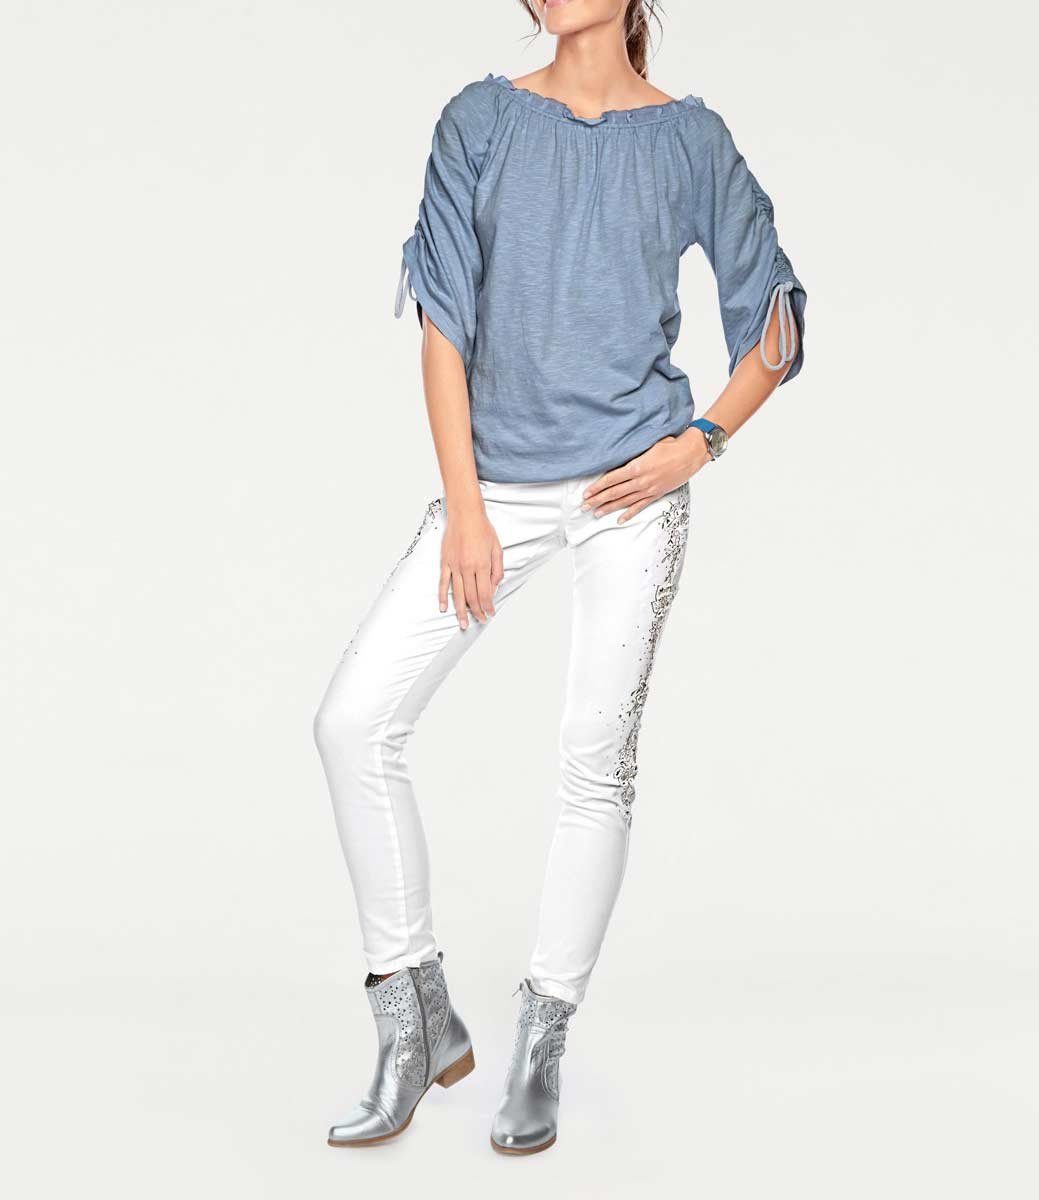 Damen TESINI LINEA Designer-Shirt, blau heine Carmenshirt